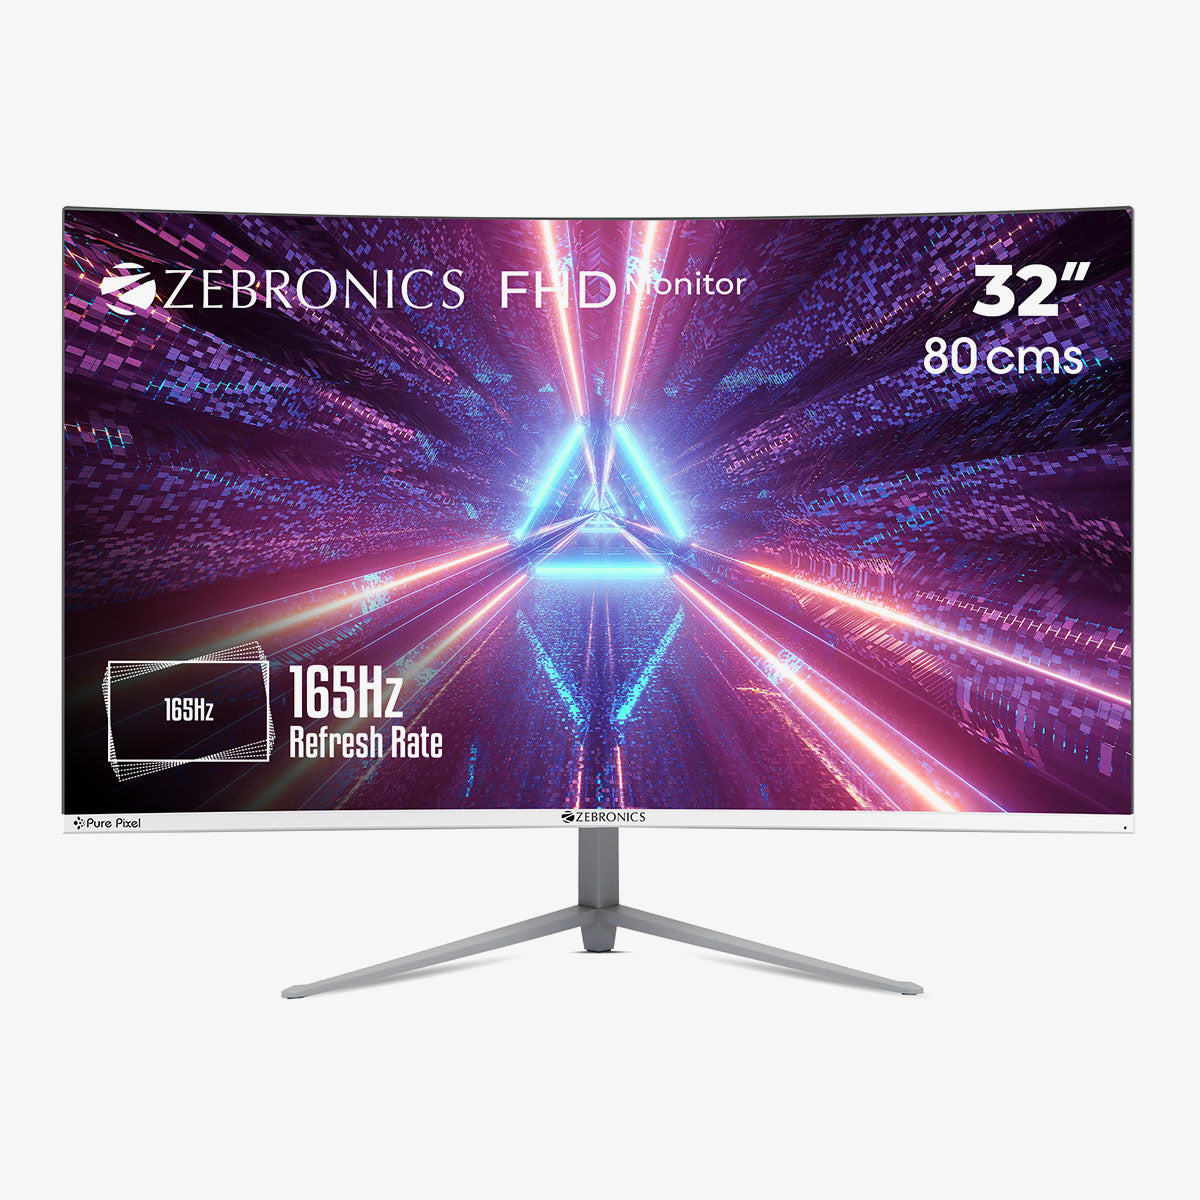 ZEB-AC32FHD LED (165Hz) - Gaming Monitor - Zebronics